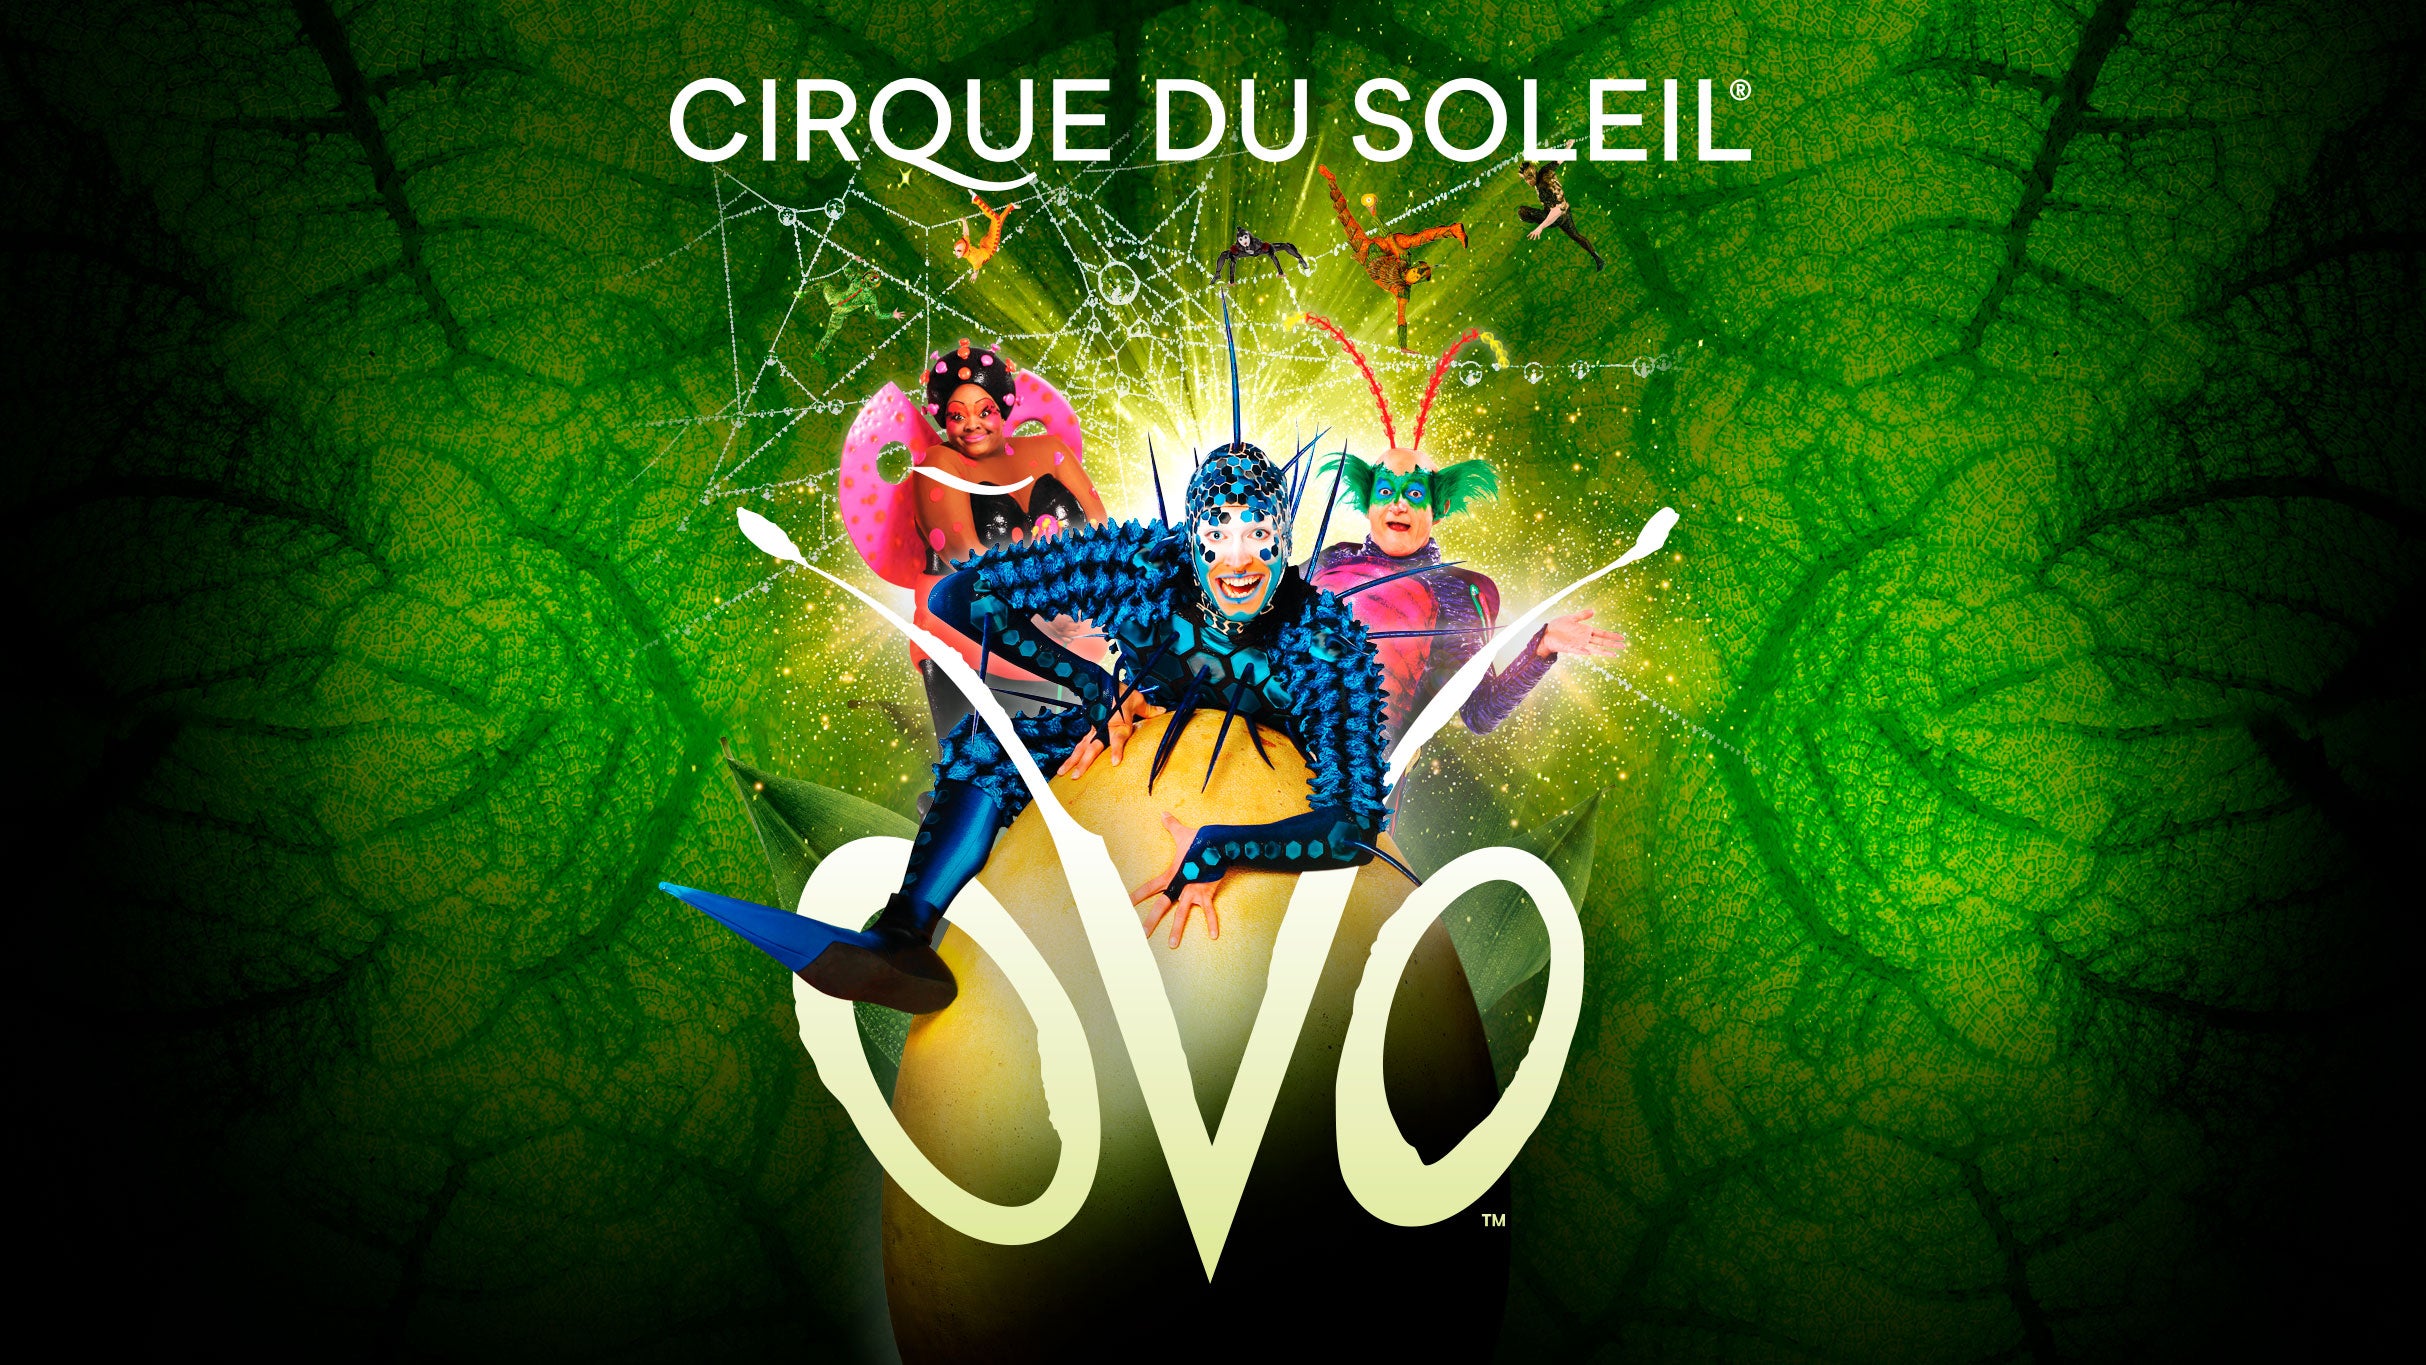 Cirque du Soleil: OVO at Capital One Arena - Washington, DC 20004